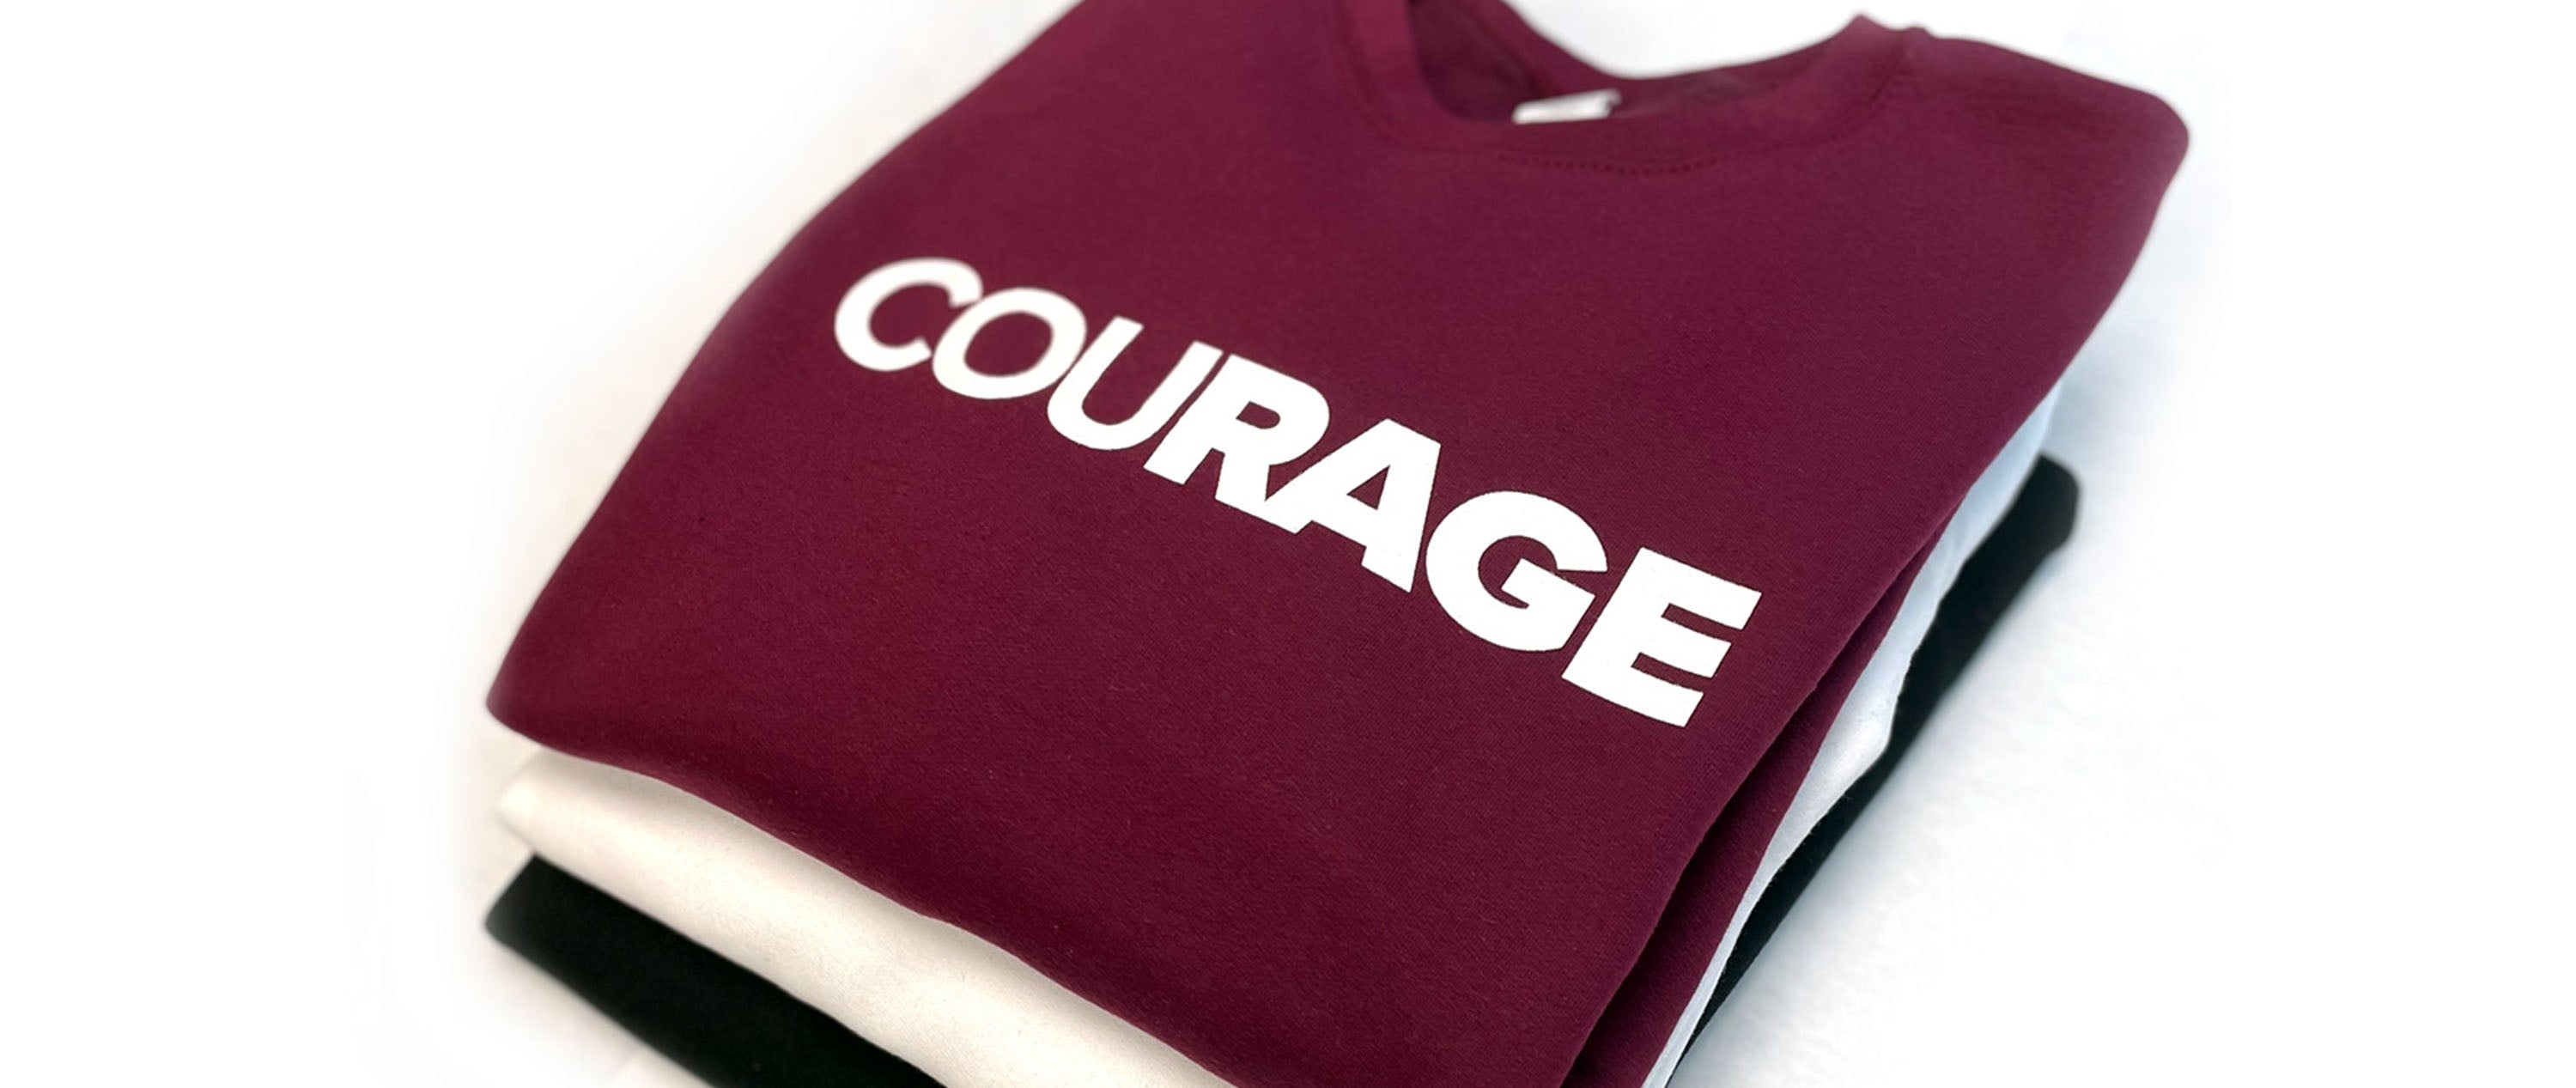 Stack of sweatshirts with Courage branding